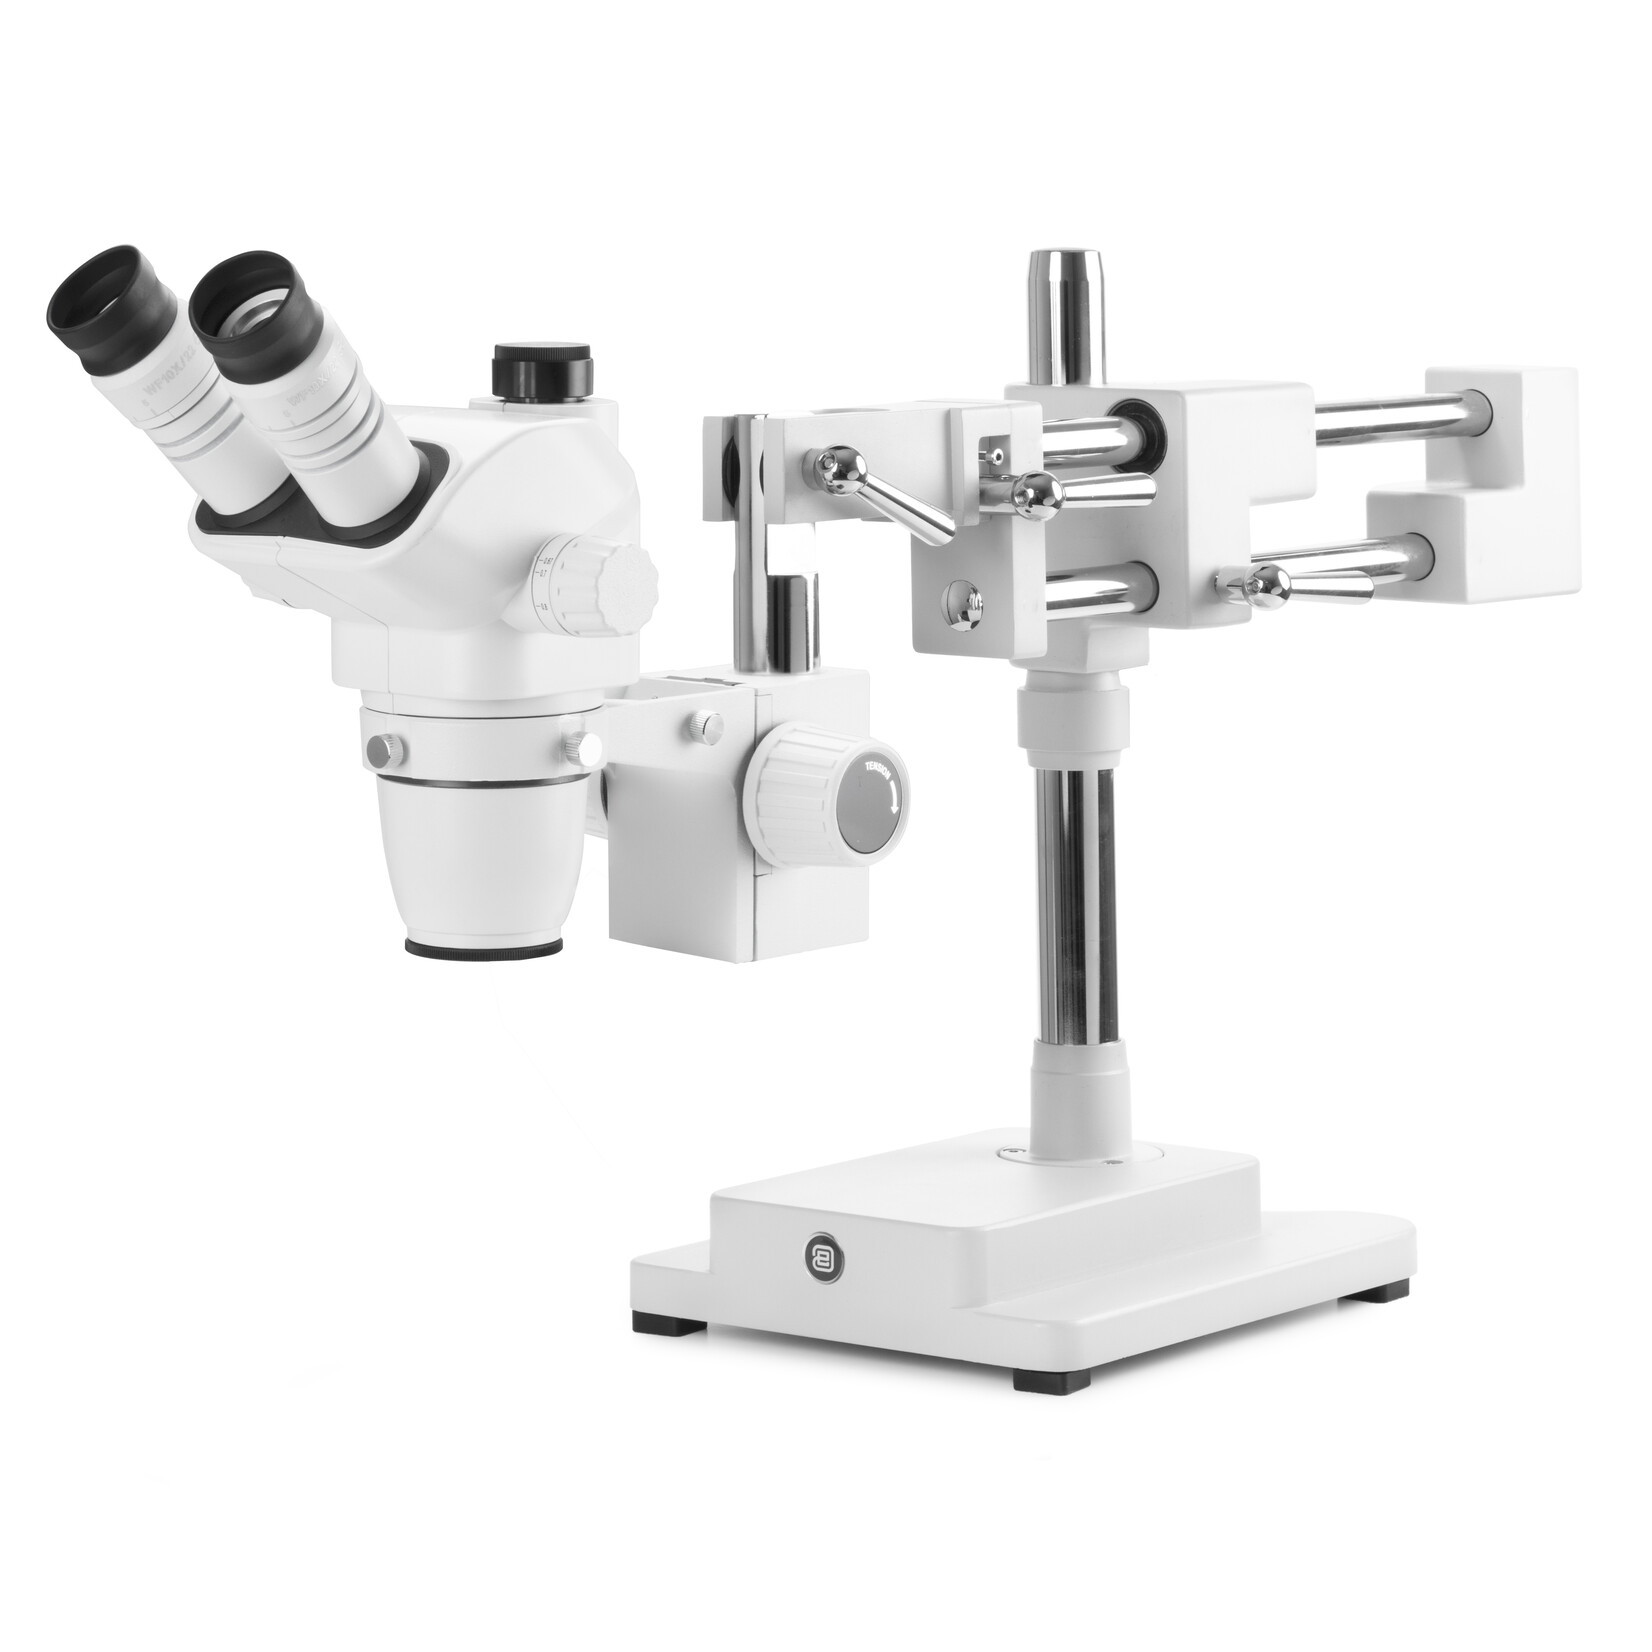 Microscopio estereoscópico trinocular con zoom NexiusZoom EVO-DFS, objetivo zoom de 0,65x a 5,5x, aumento de 6,5x a 55x